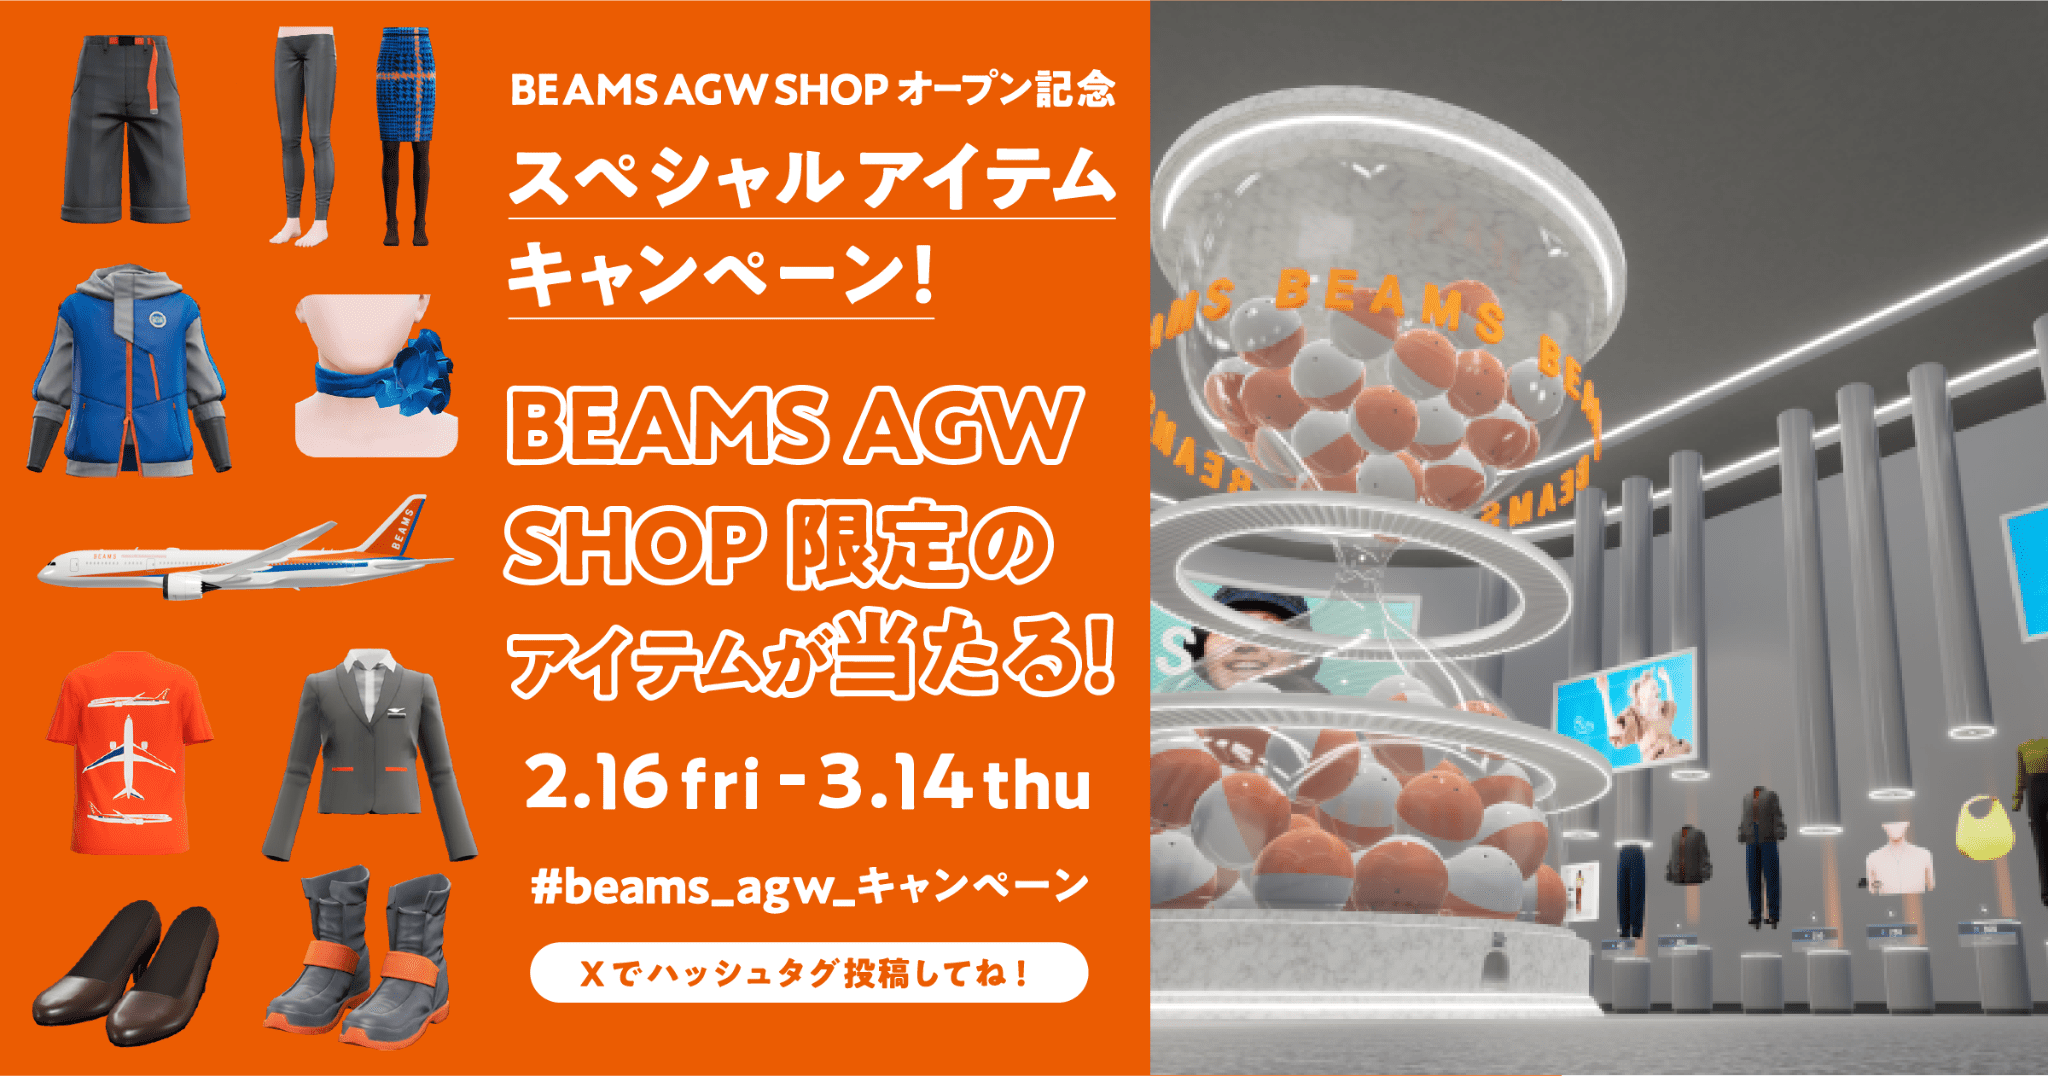 BEAMS AGW SHOP オープン記念 スペシャルアイテムキャンペーン！AGW SHOP限定のアイテムが当たる！2.16 fri - 3.14 thu Xでハッシュタグ投稿してね！